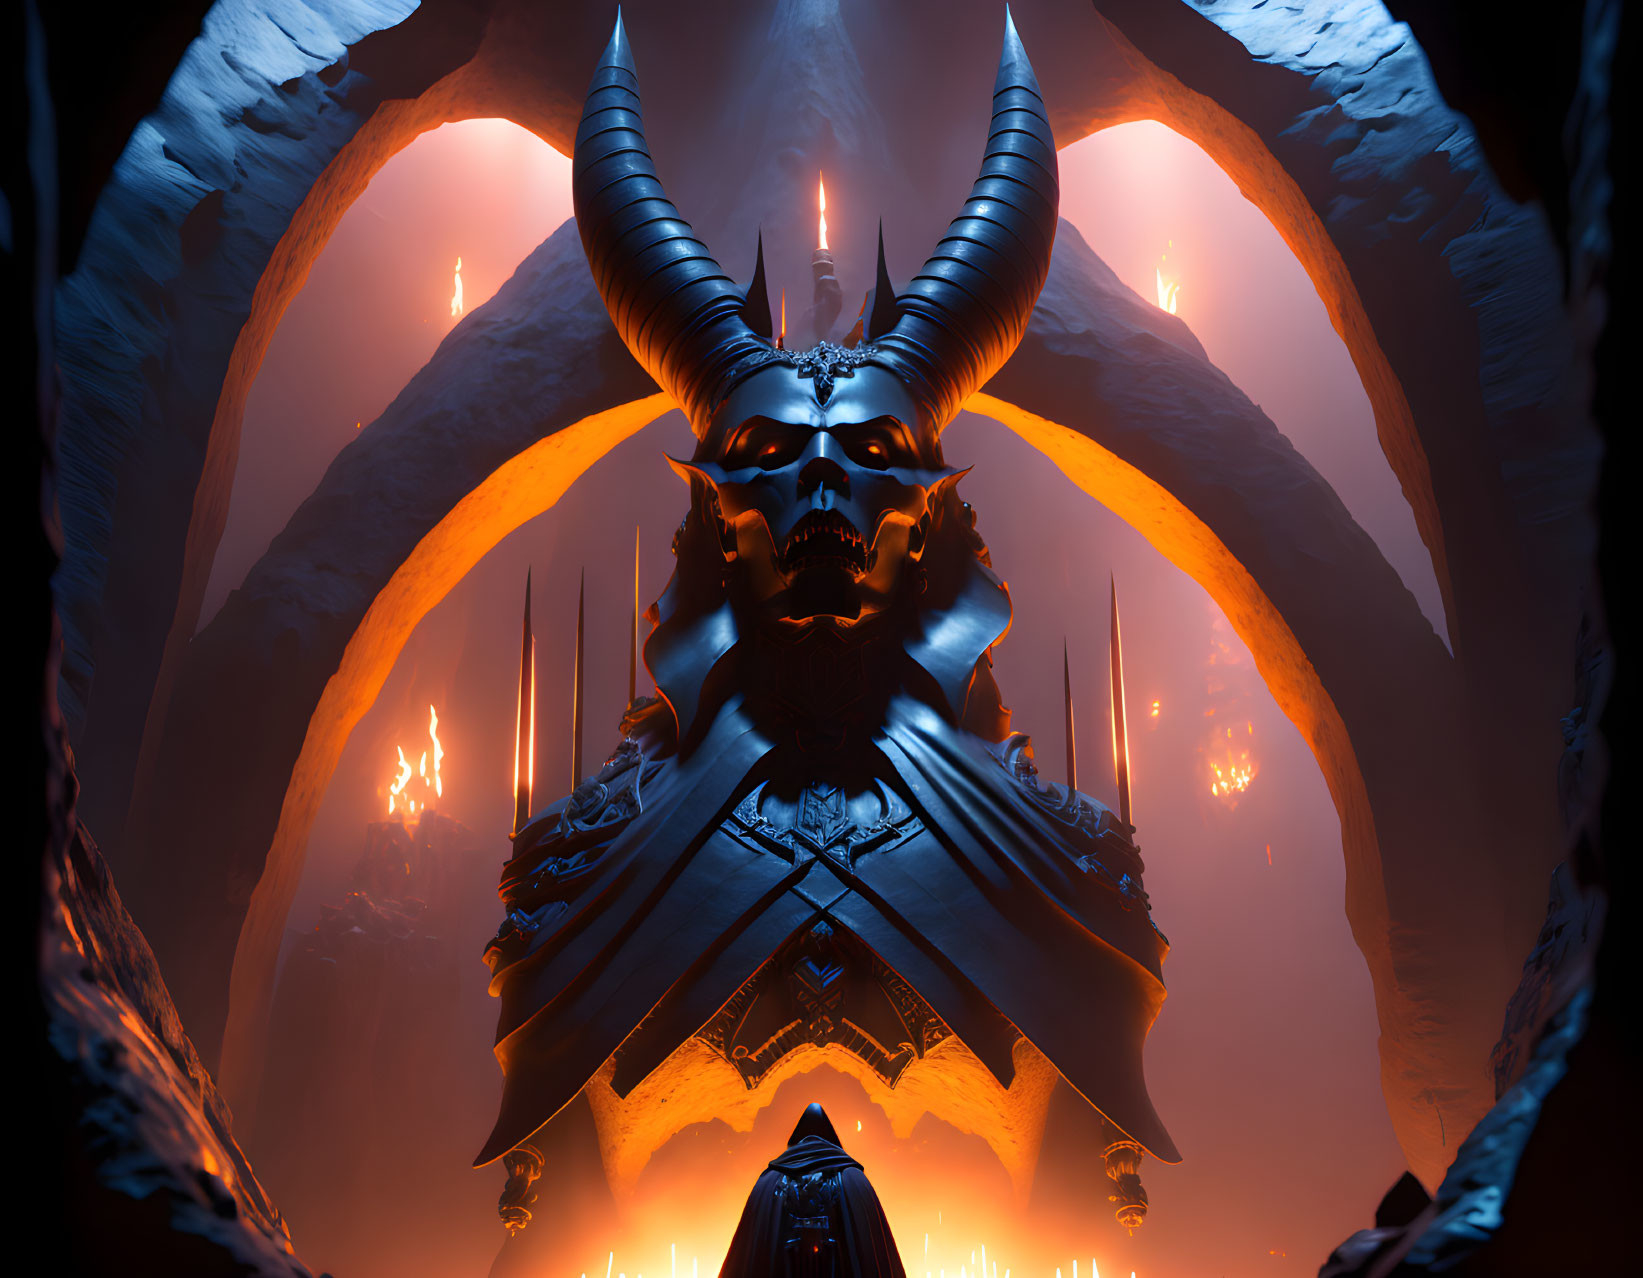 Horned demonic figure in fiery cavern with glowing embers